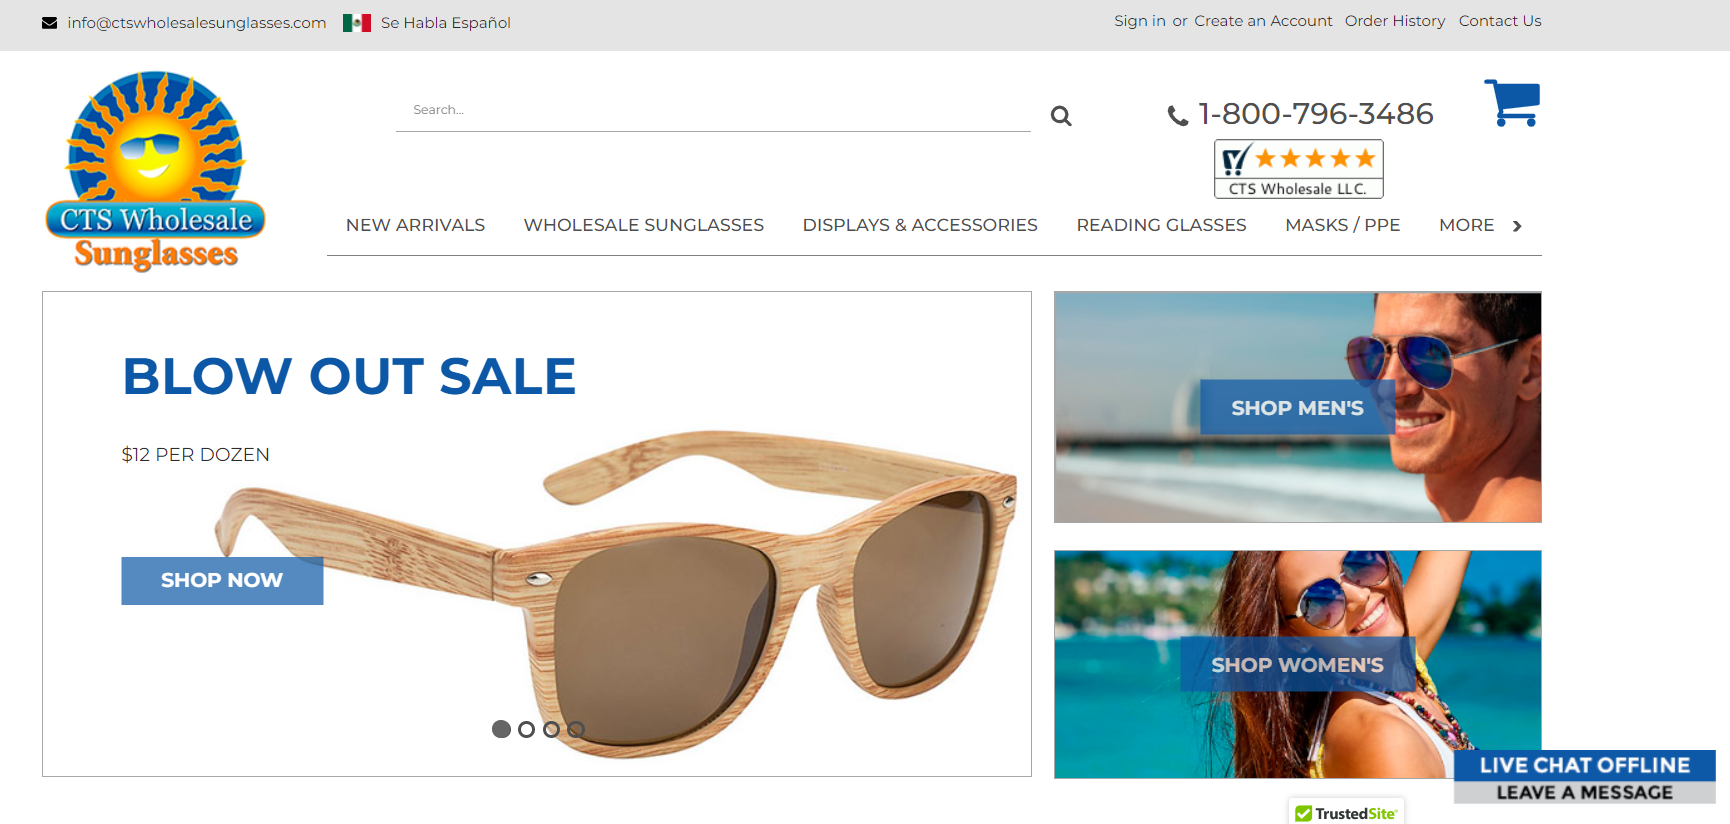 cts wholesale sunglasses